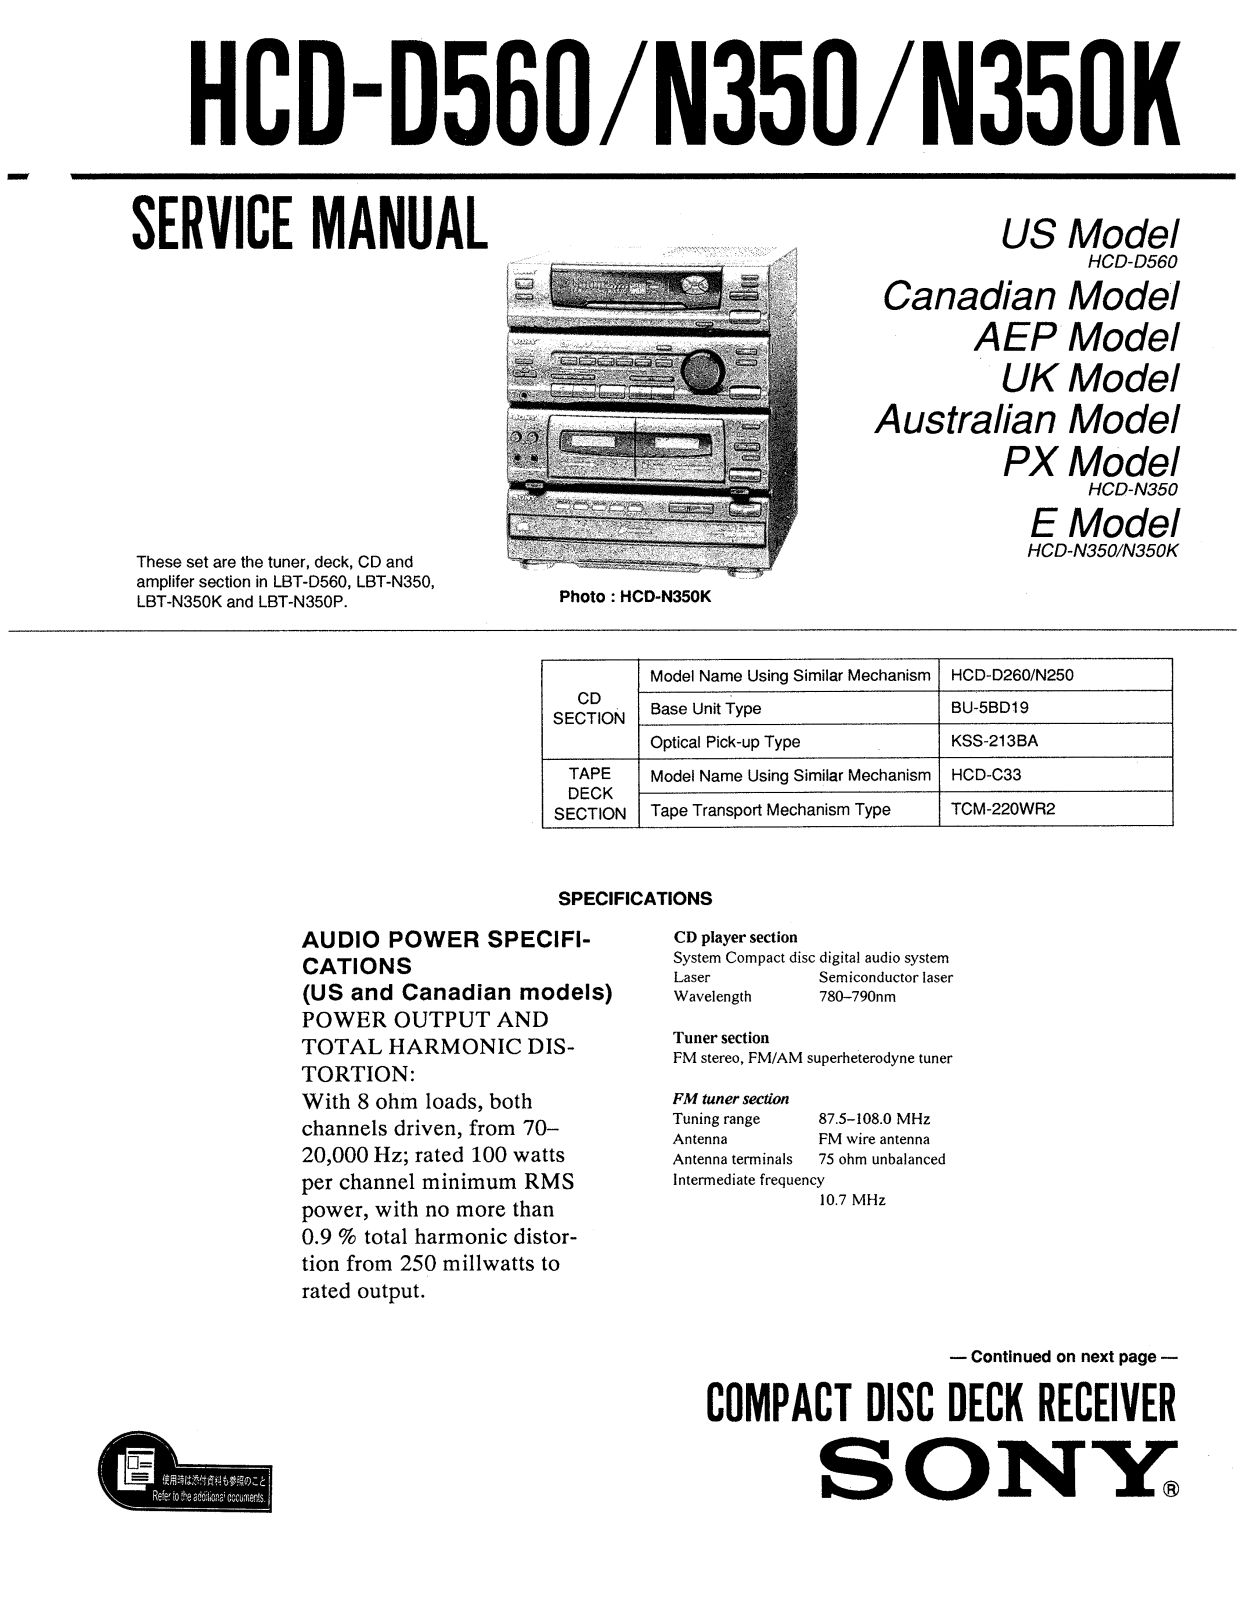 Sony HCD D560, HCD N350, HCD N350K Service Manual